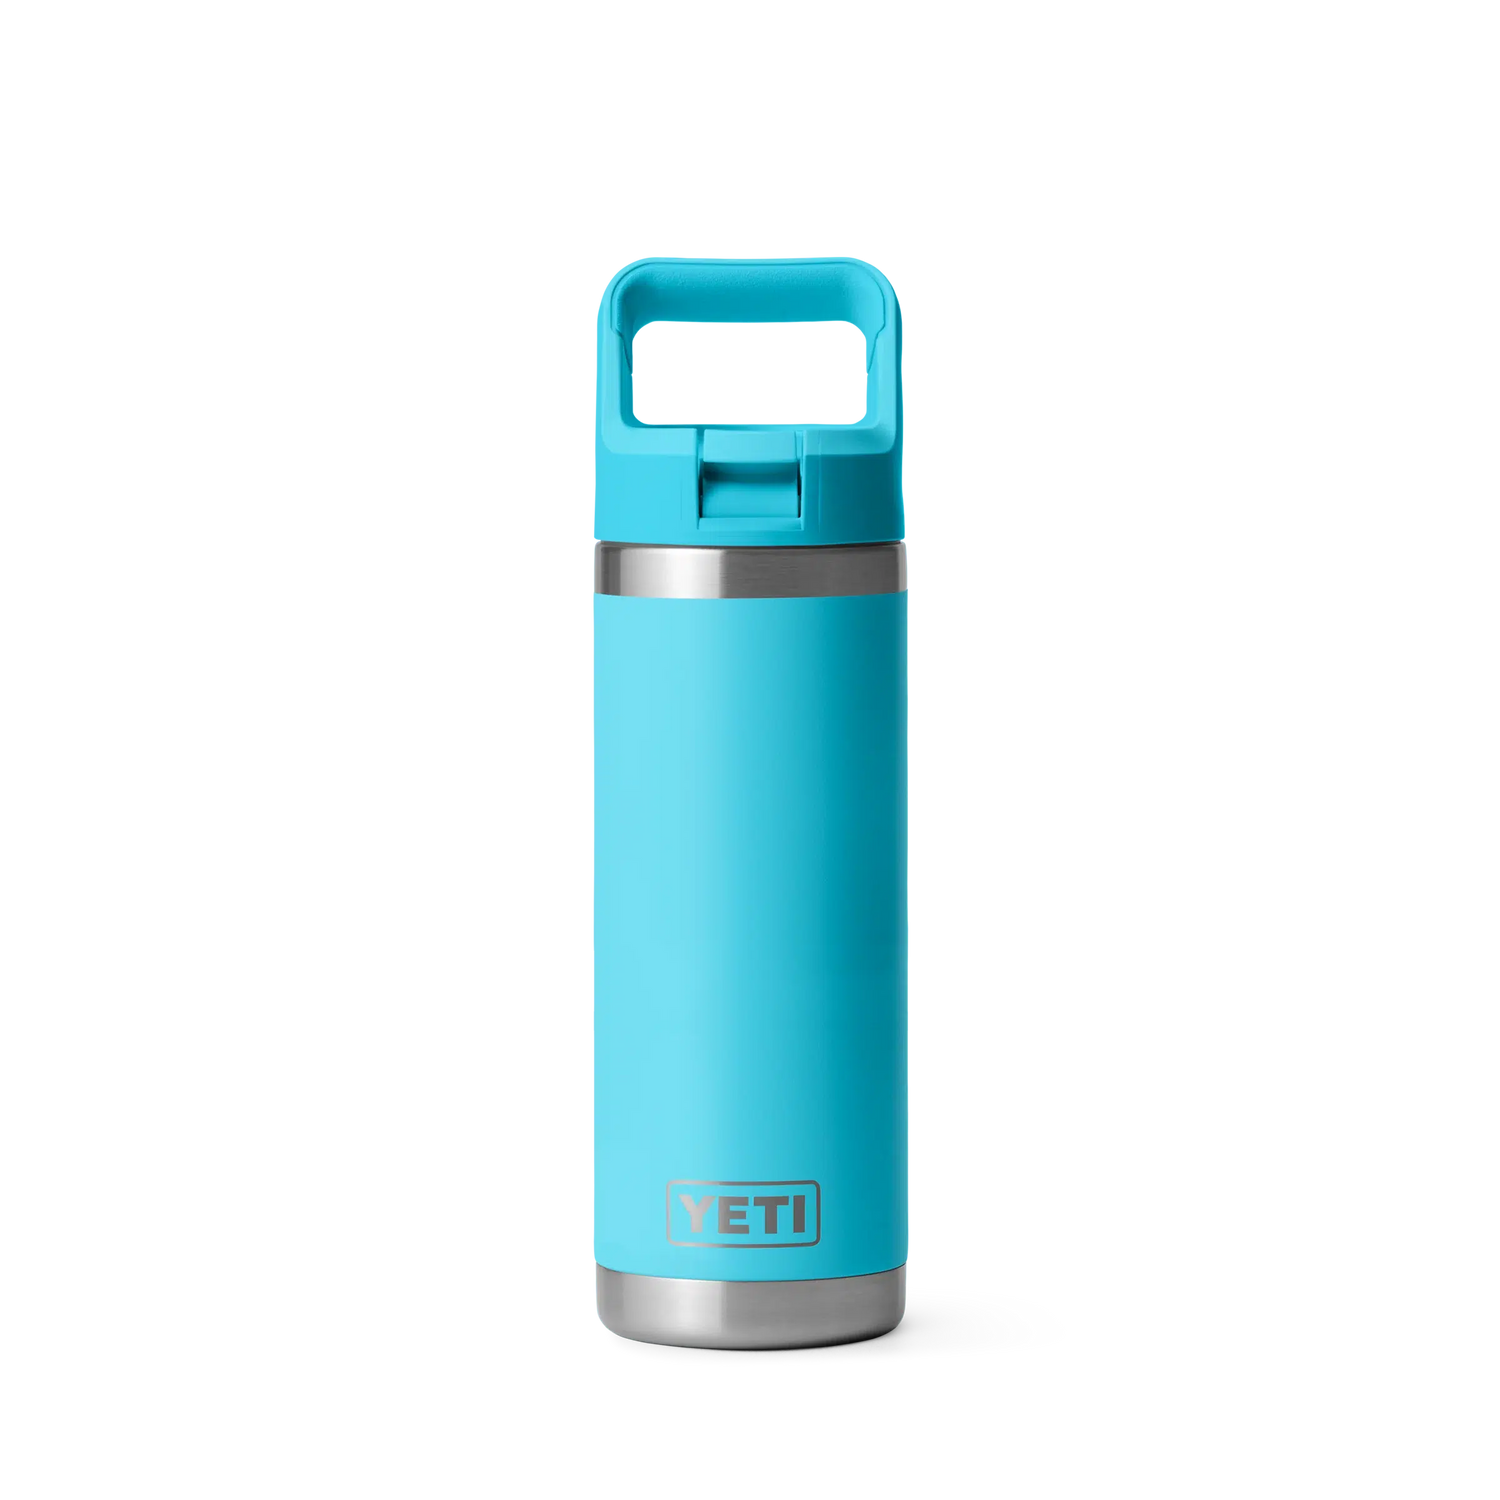 Yeti Rambler 18oz (532ml) Reusable Bottle with Straw Cap-Coolers & Drinkware-Yeti-Reef Blue-Fishing Station